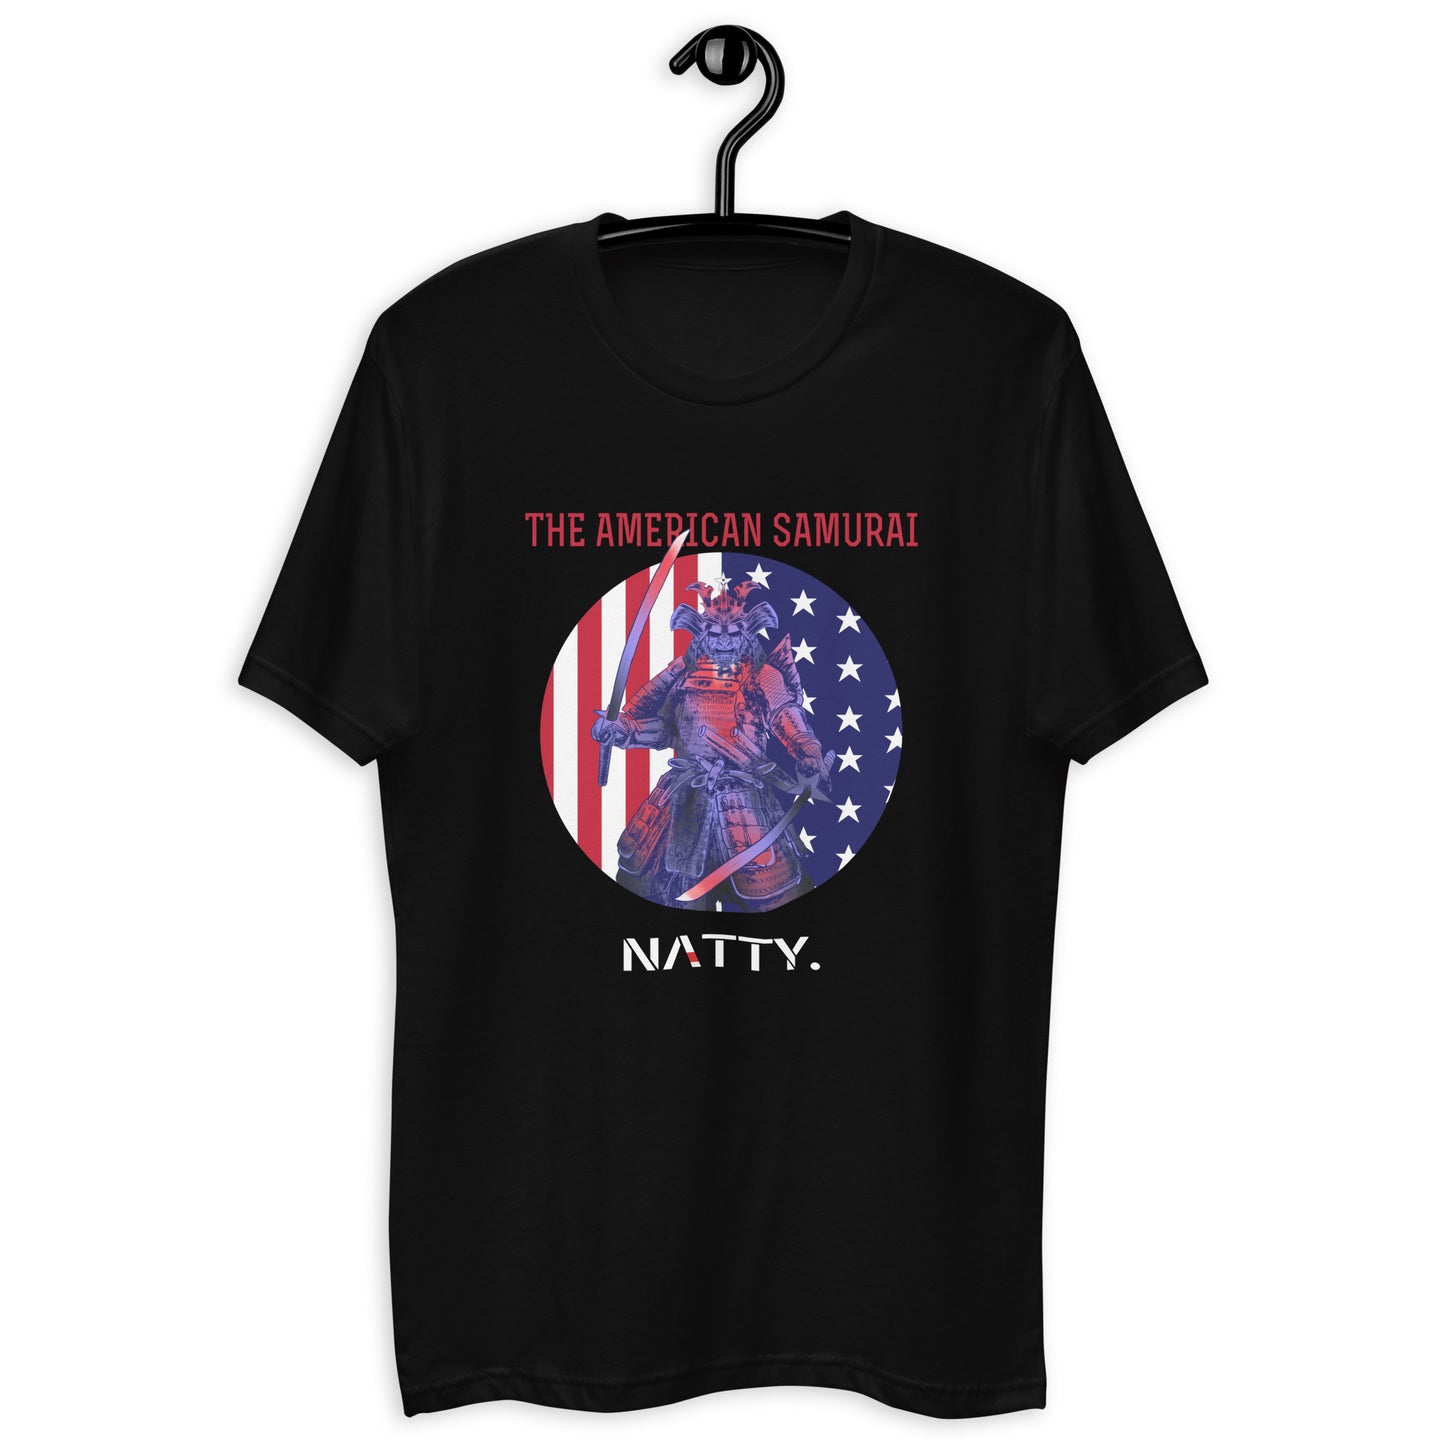 Grayson Fisher x NATTY. Fighter Collab Shirt